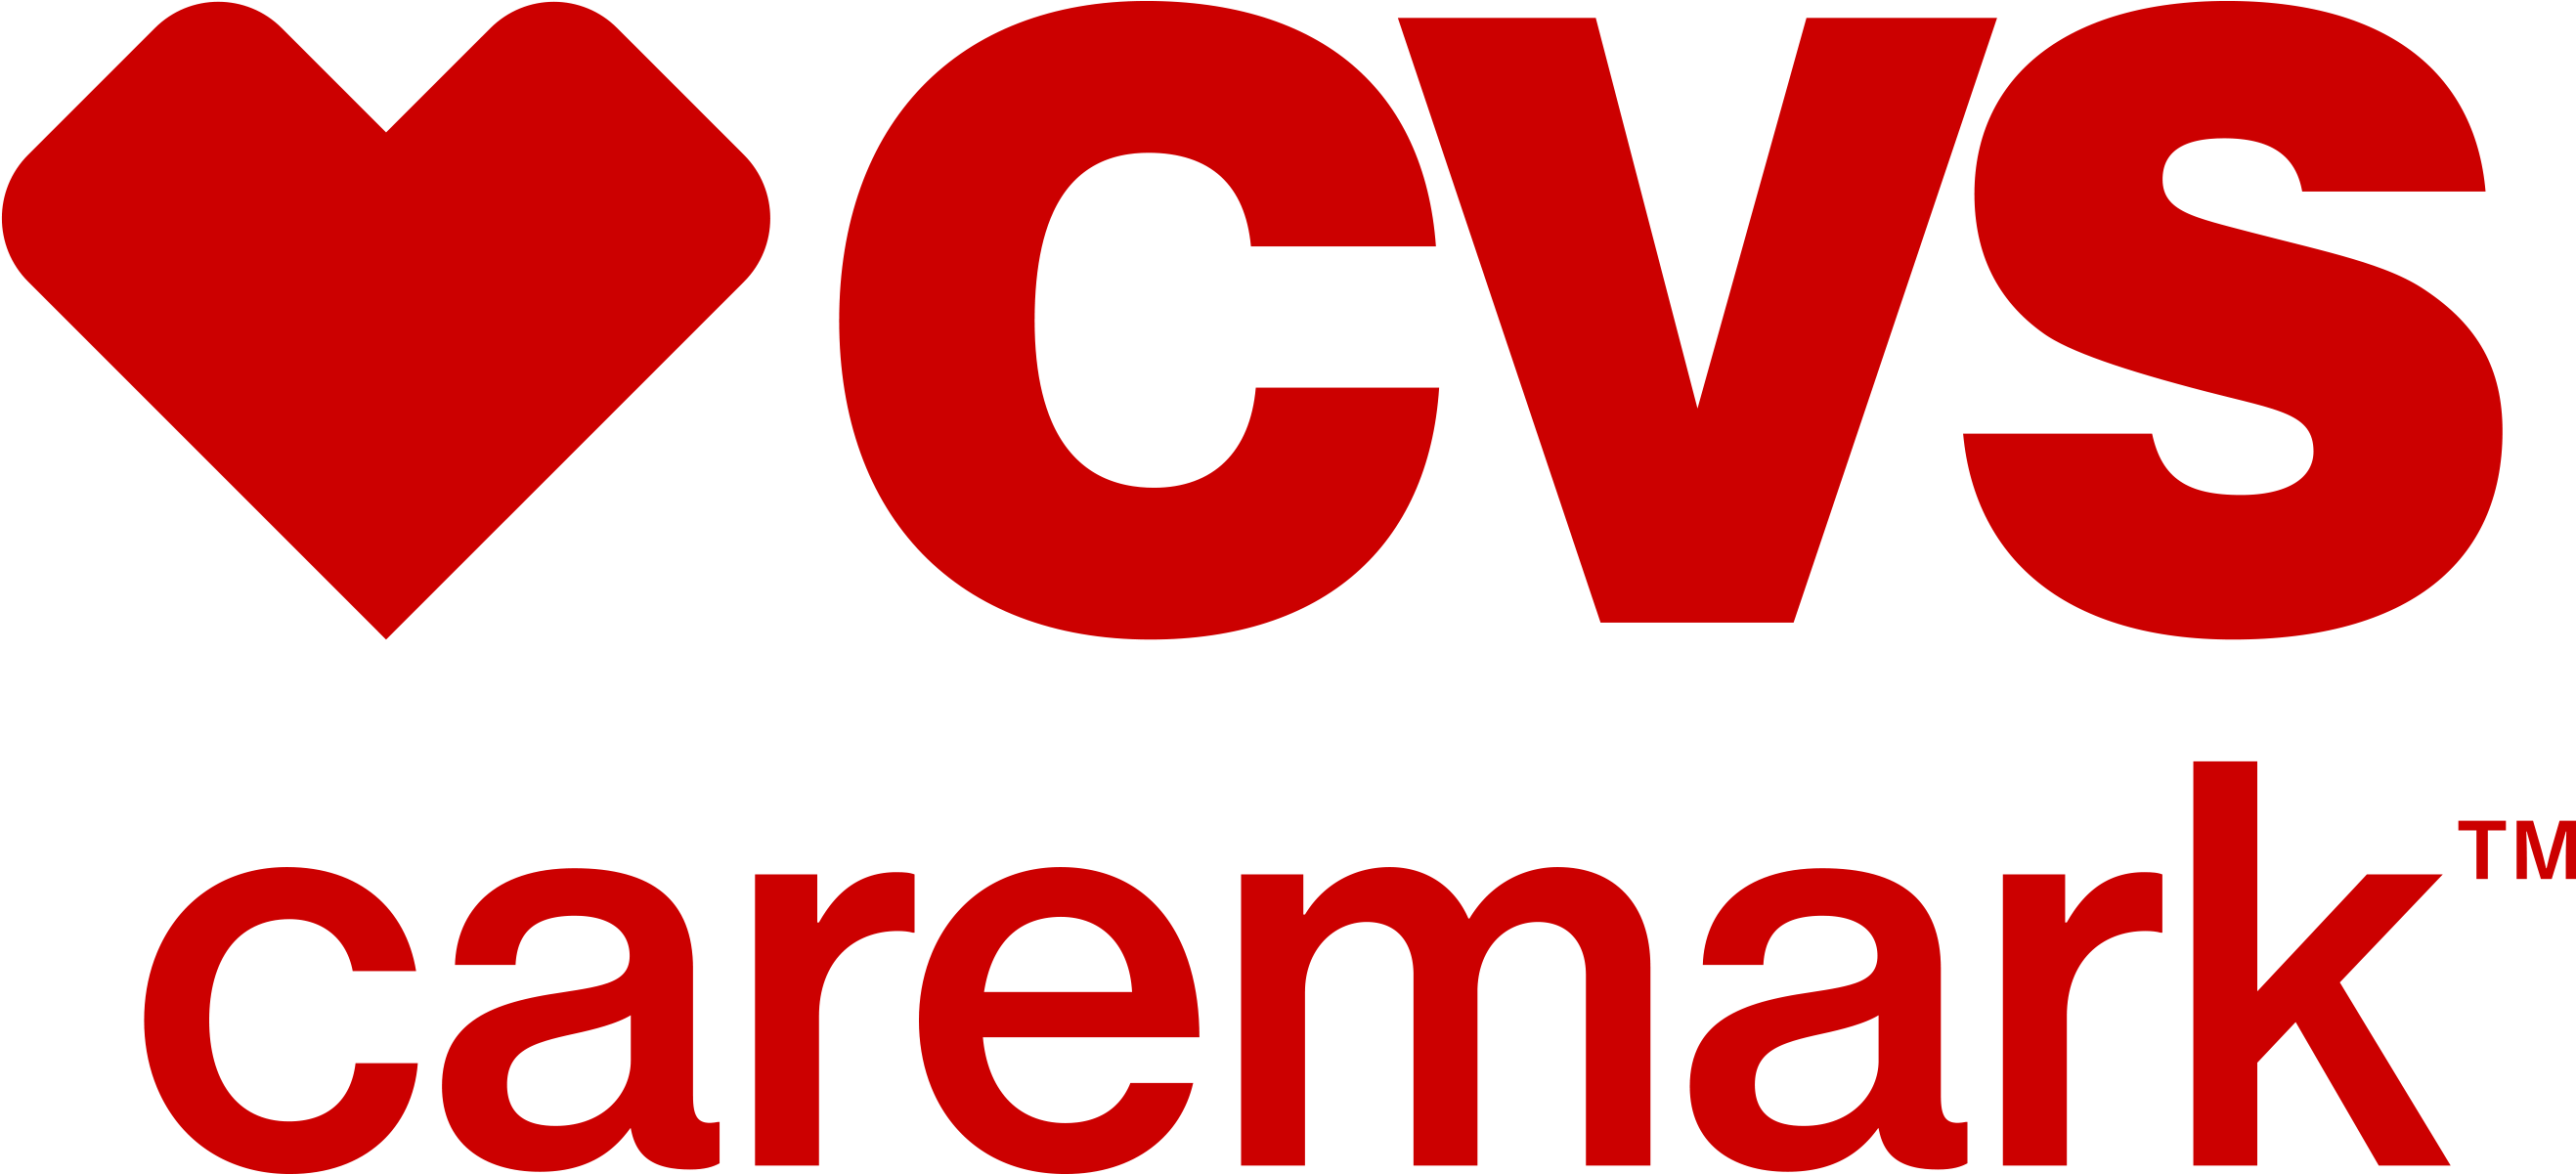 Cvs Caremark Downloadable Logo Stacked - Cvs Caremark Logo Vector (2642x1200)